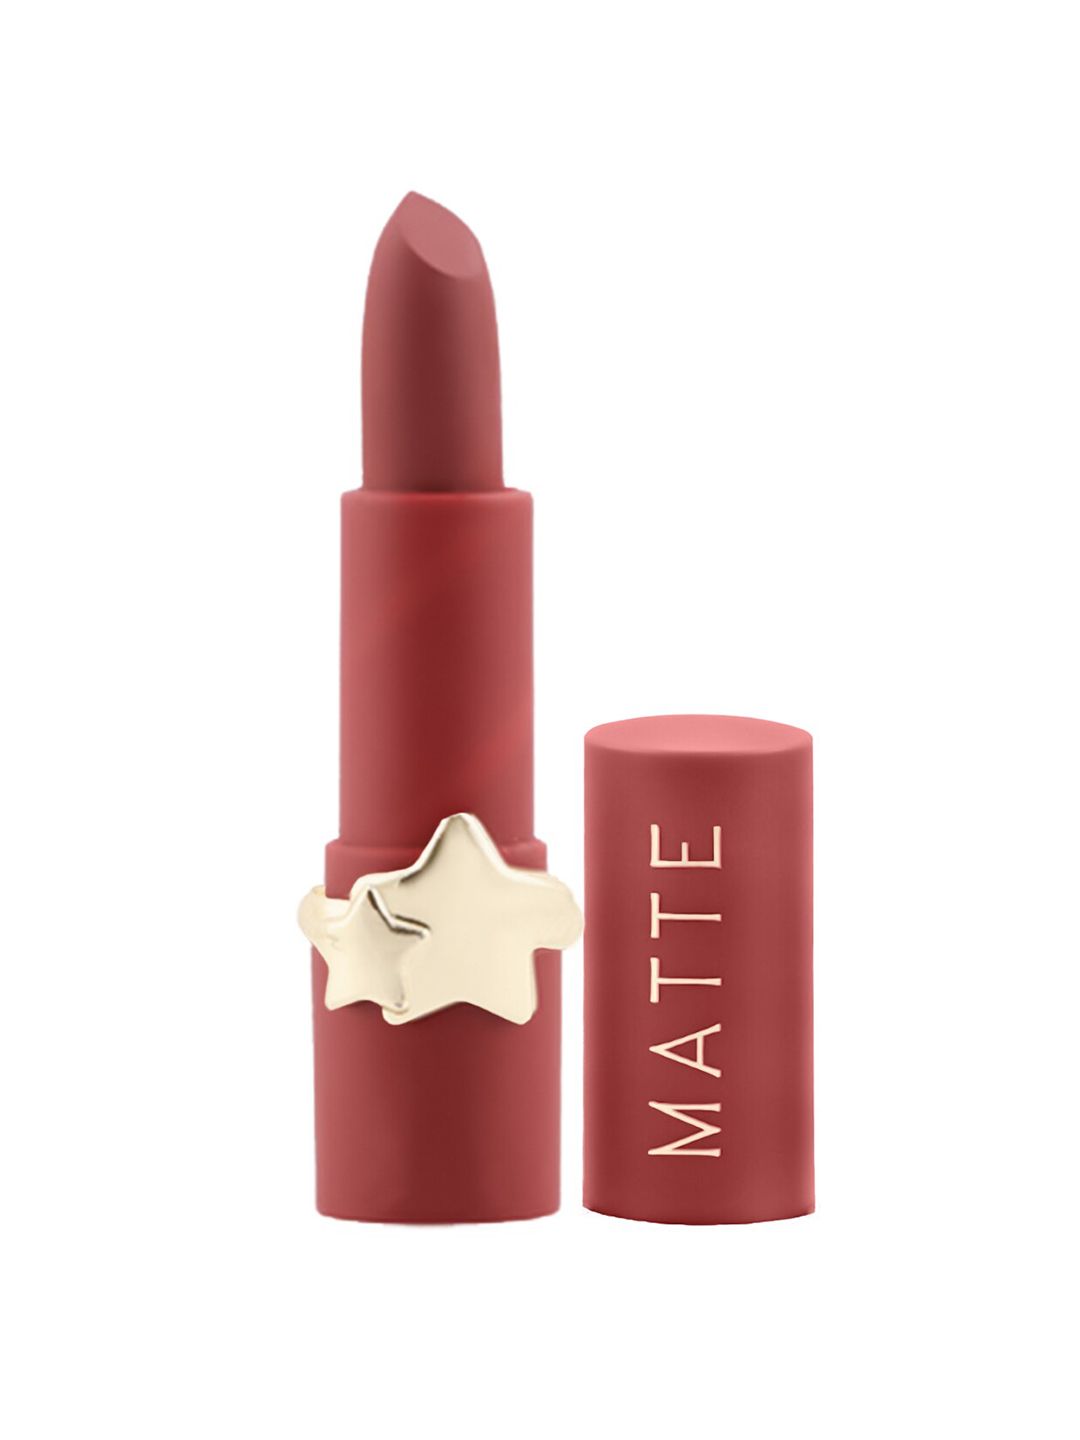 MISS ROSE Moisturizing Creamy Matte Lipstick 20g Price in India